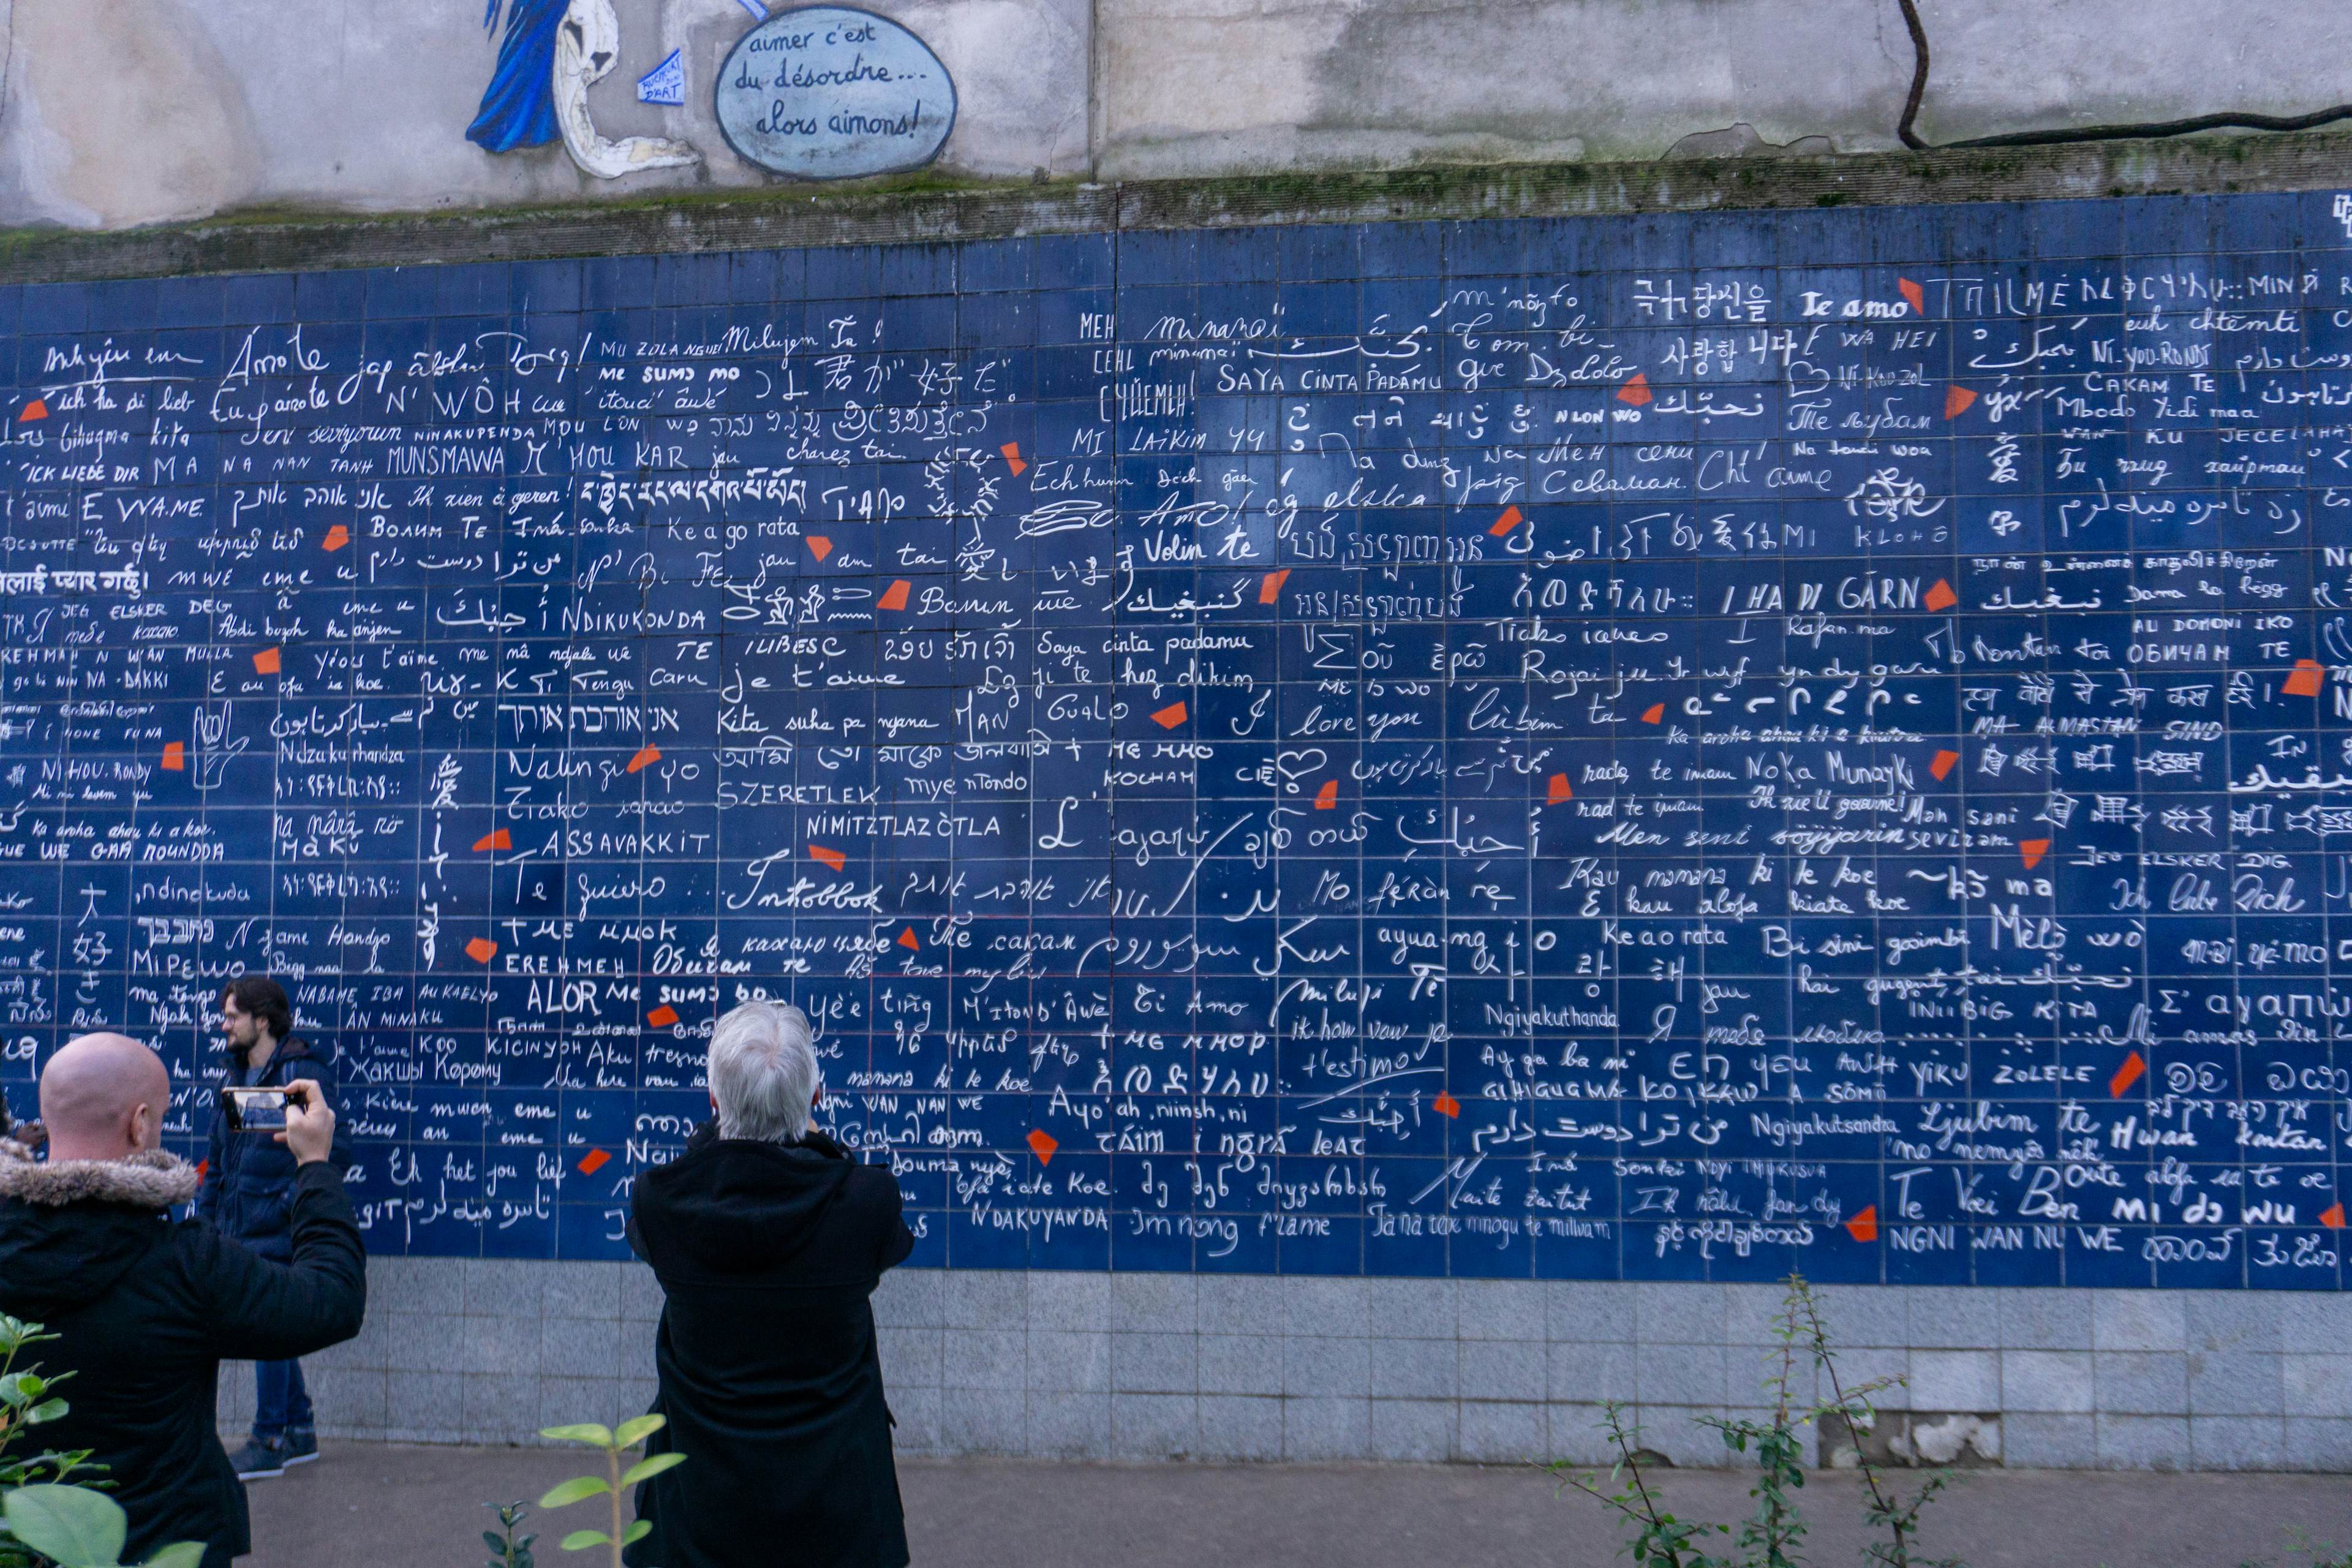 The Wall of Love (Le Mur de je t'aime) image